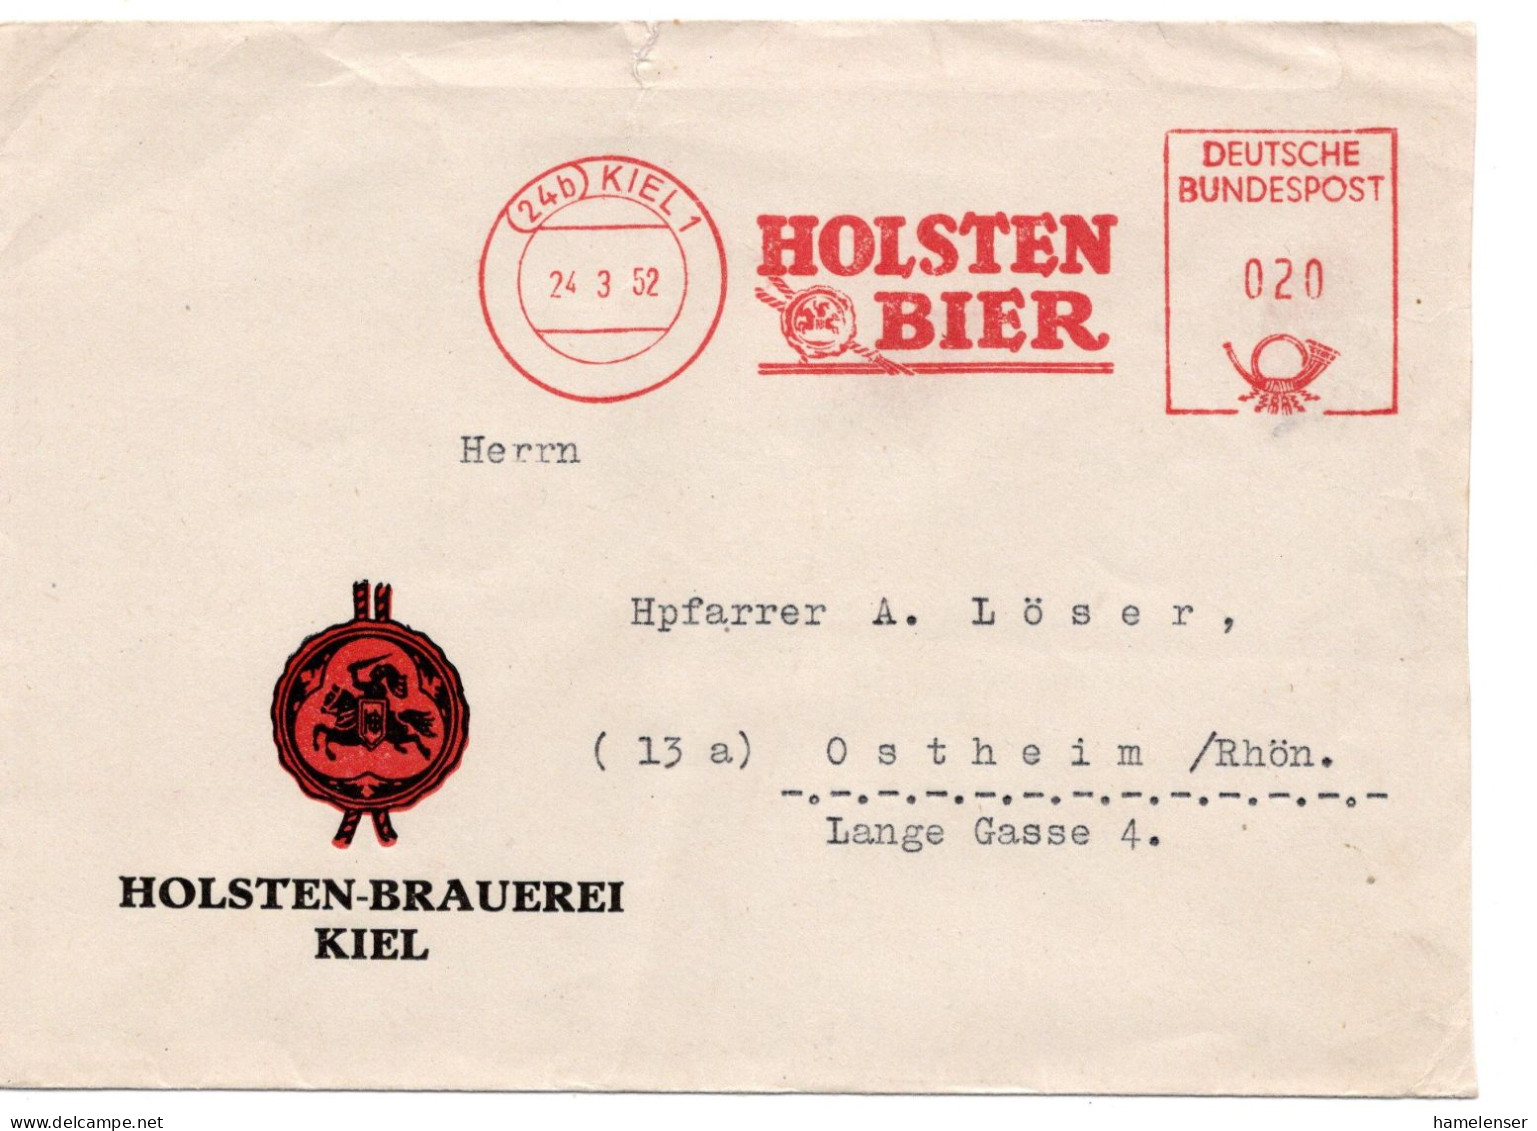 65016 - Bund - 1952 - 20Pfg AbsFreistpl KIEL - HOLSTEN BIER A Bf -> Ostheim, Rs "Helgoland Ruft!"-Aufkleber - Bières